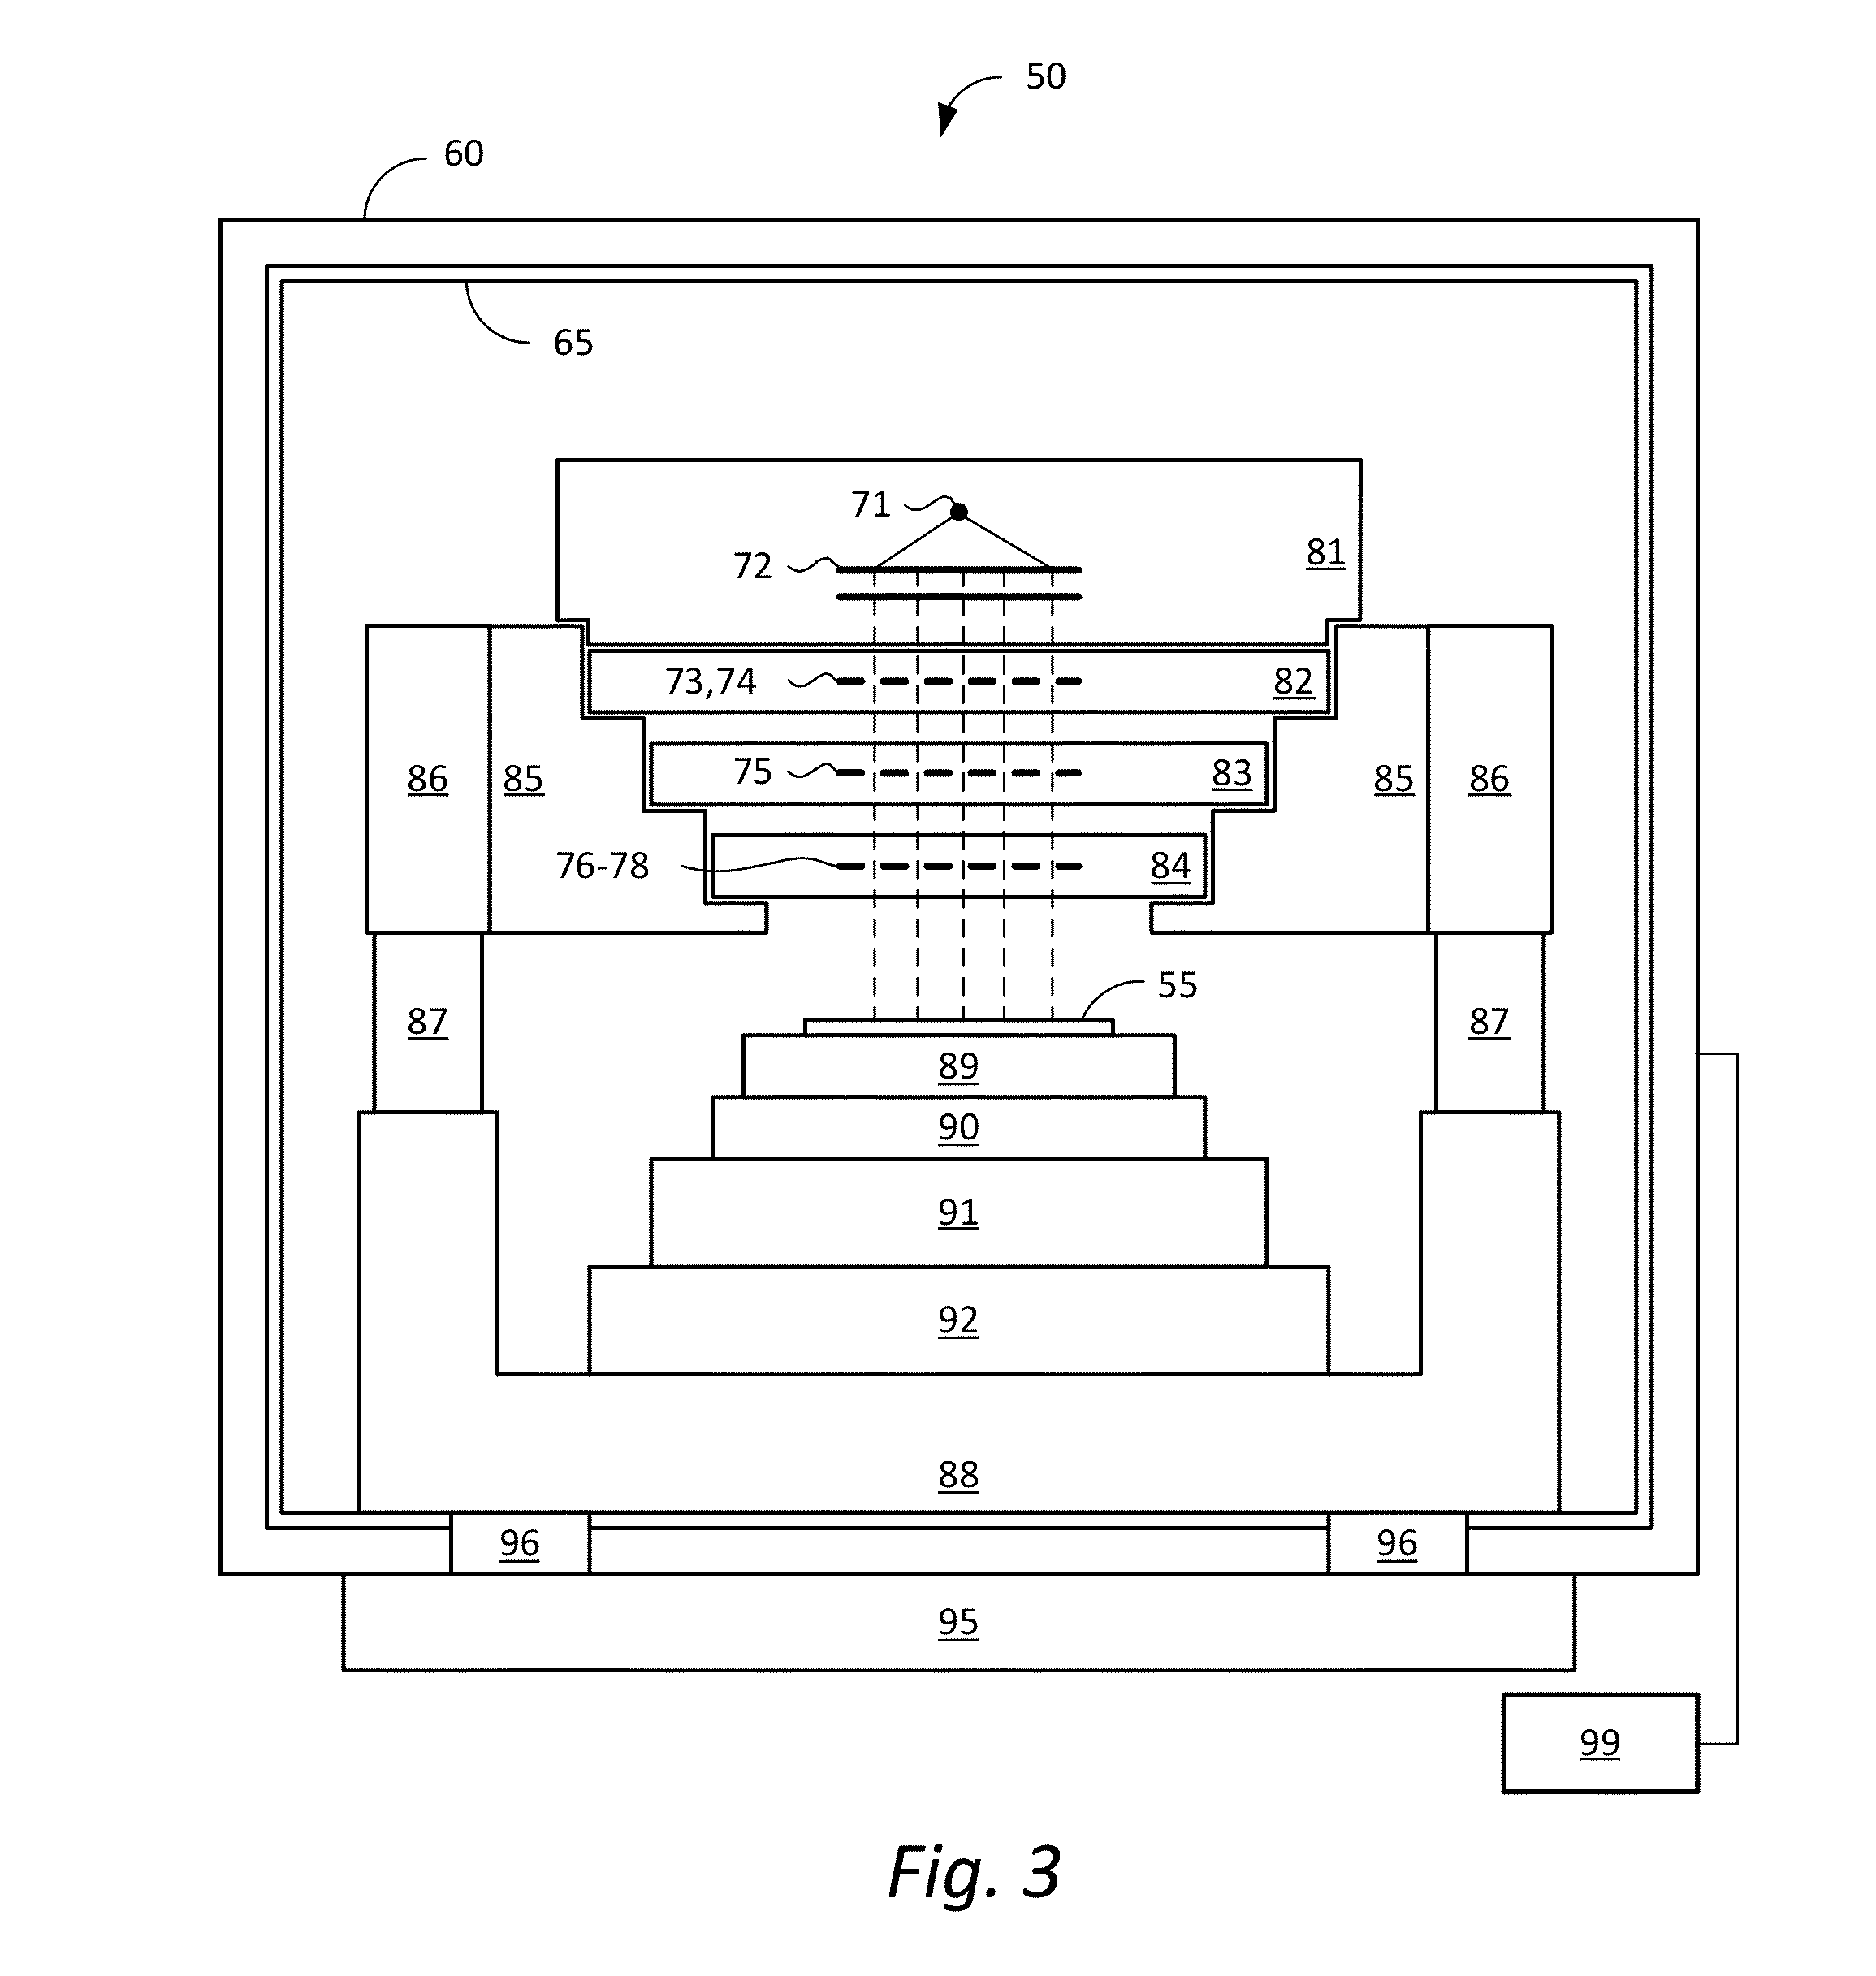 Method for forming an optical fiber array